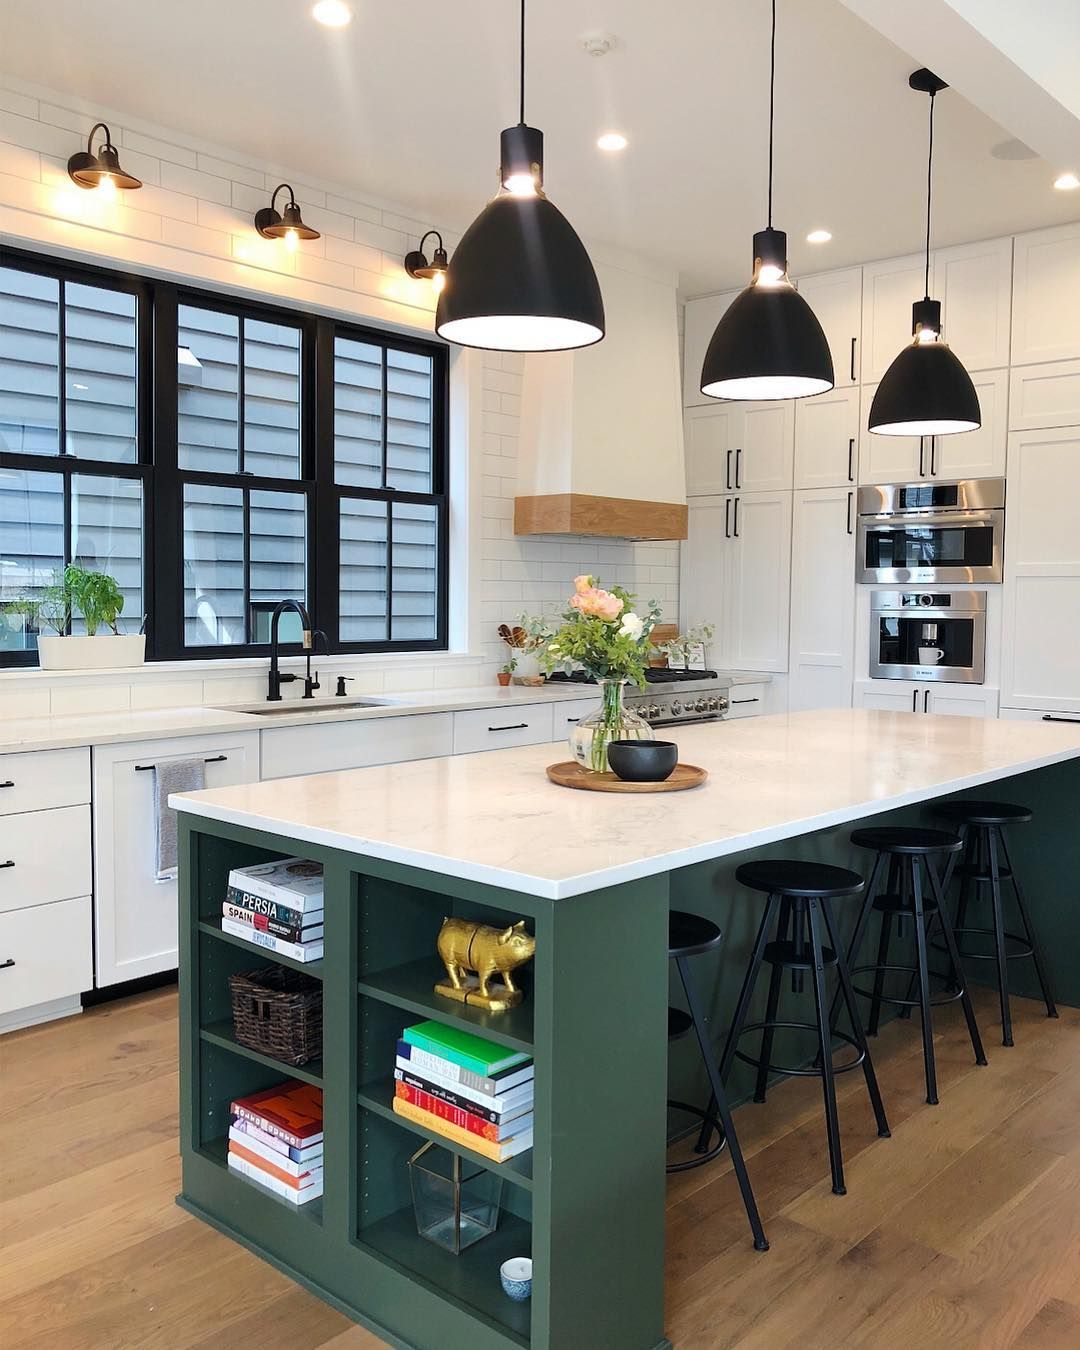 Contrasting Kitchen Island via @housesevendesign